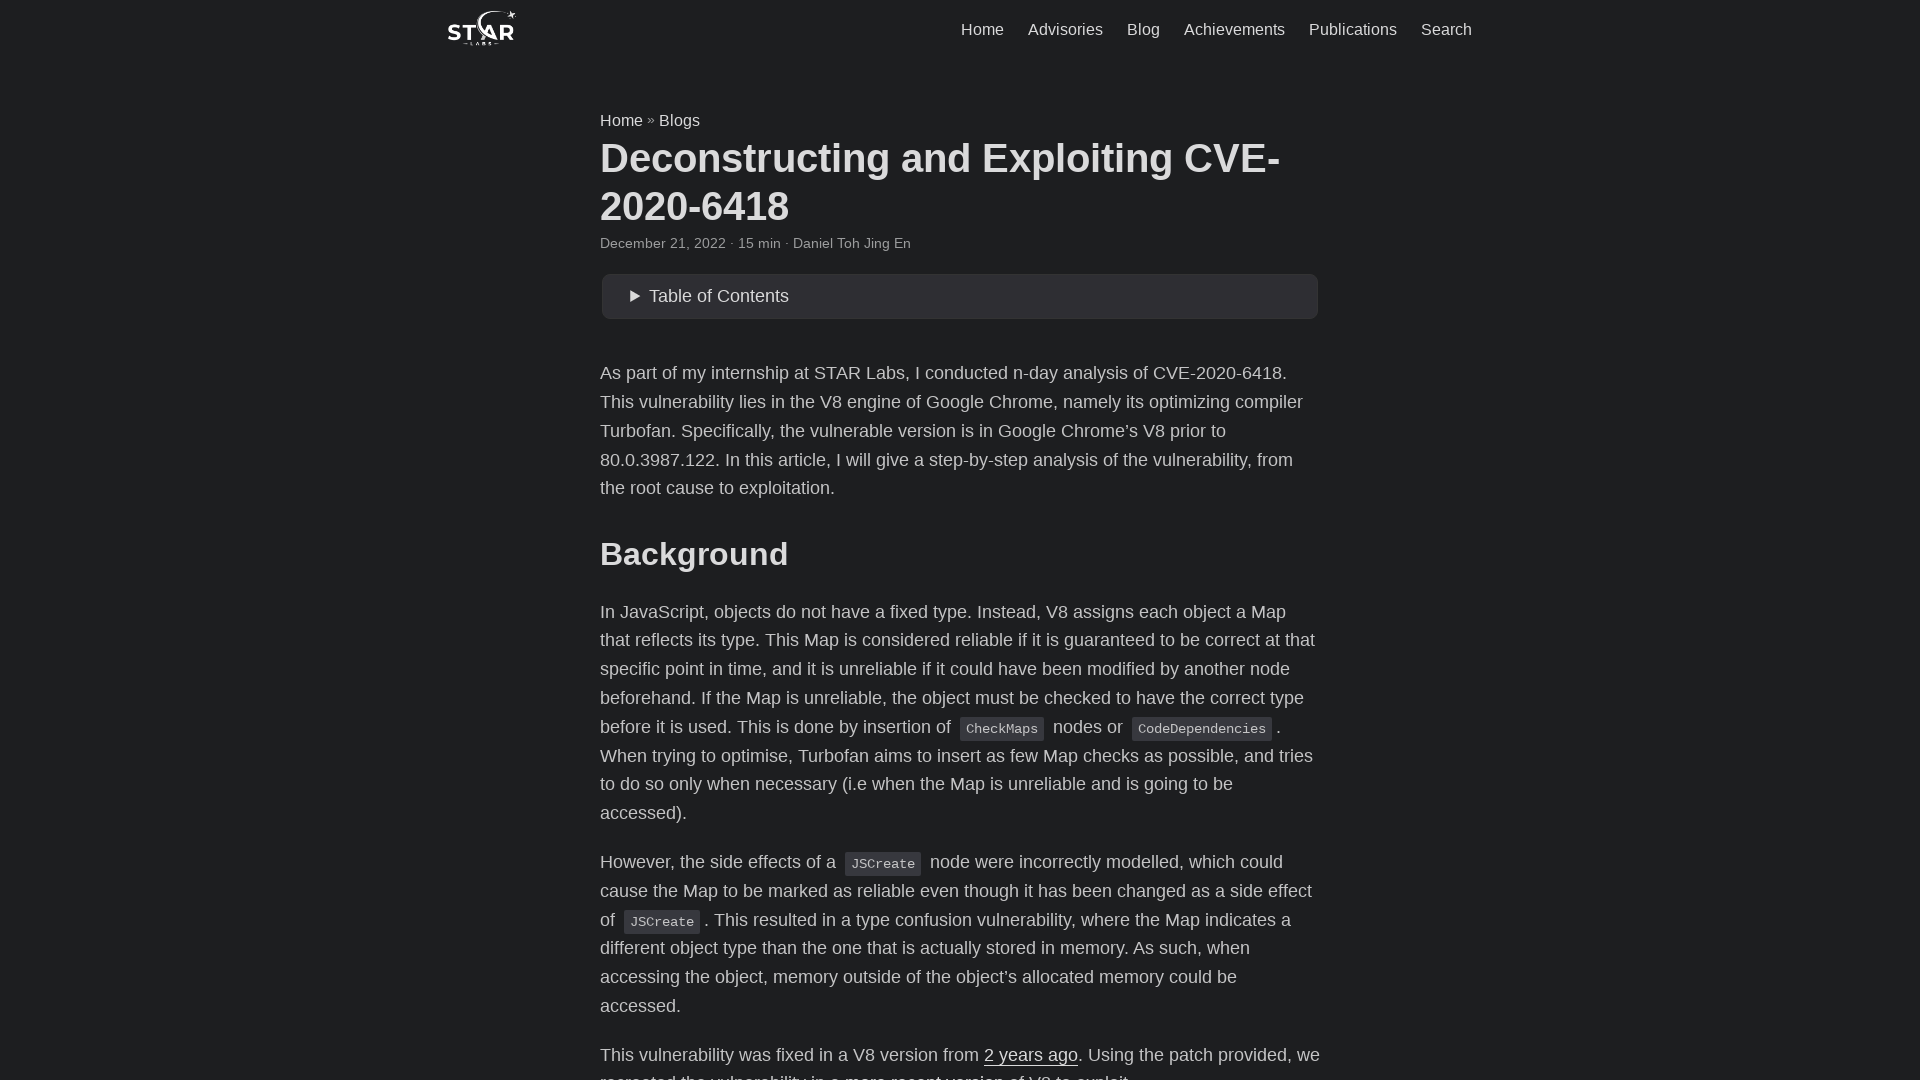 Deconstructing and Exploiting CVE-2020-6418 | STAR Labs